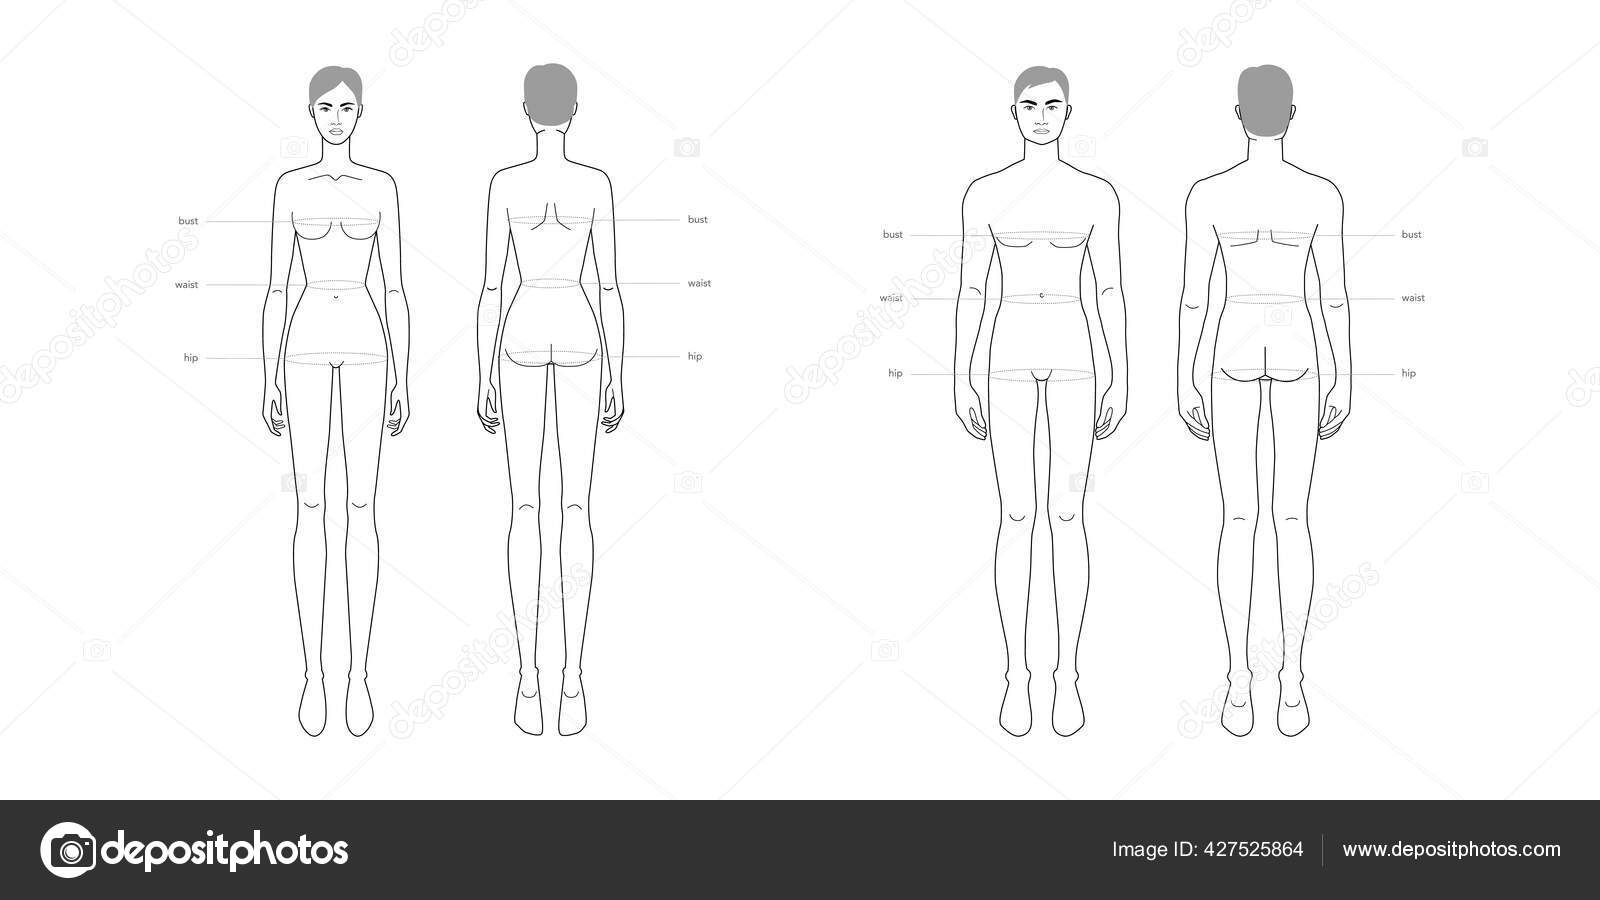 Men and women standard body parts terminology measurements